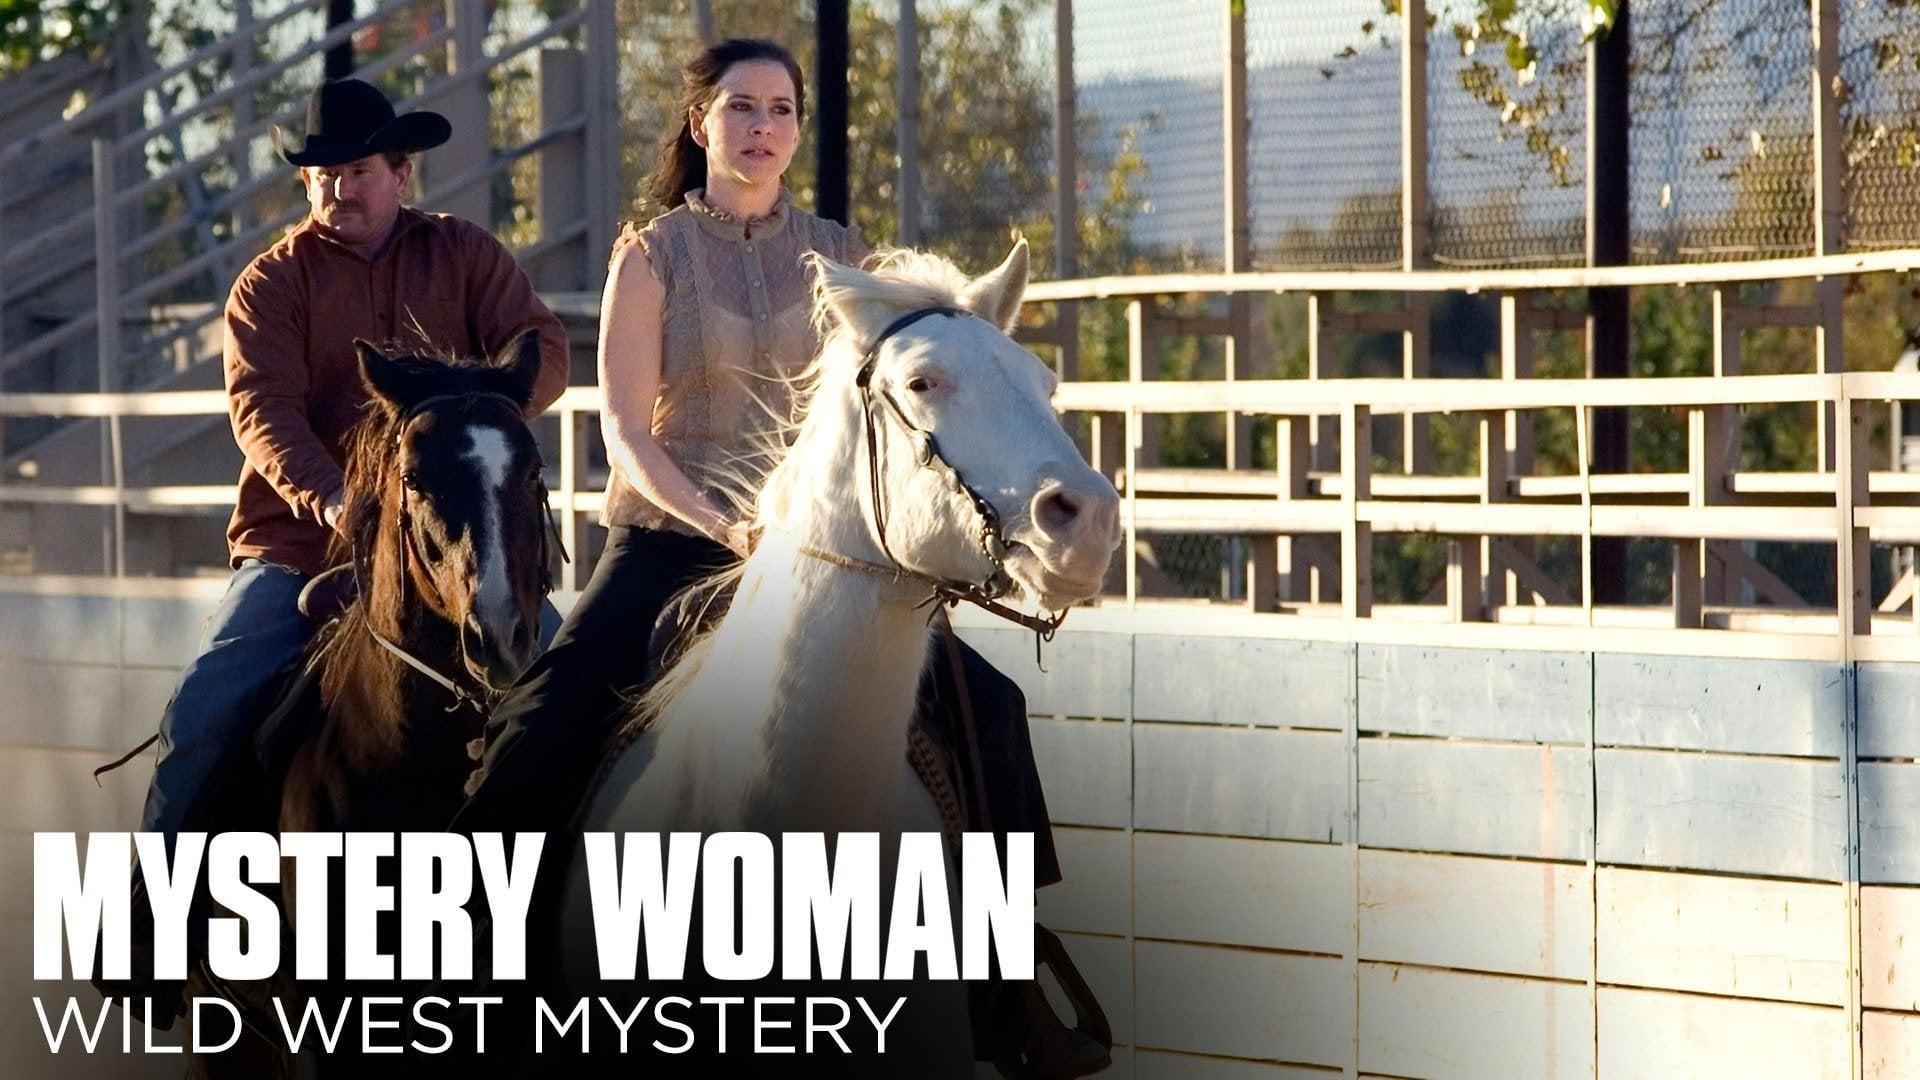 Mystery Woman: Wild West Mystery backdrop